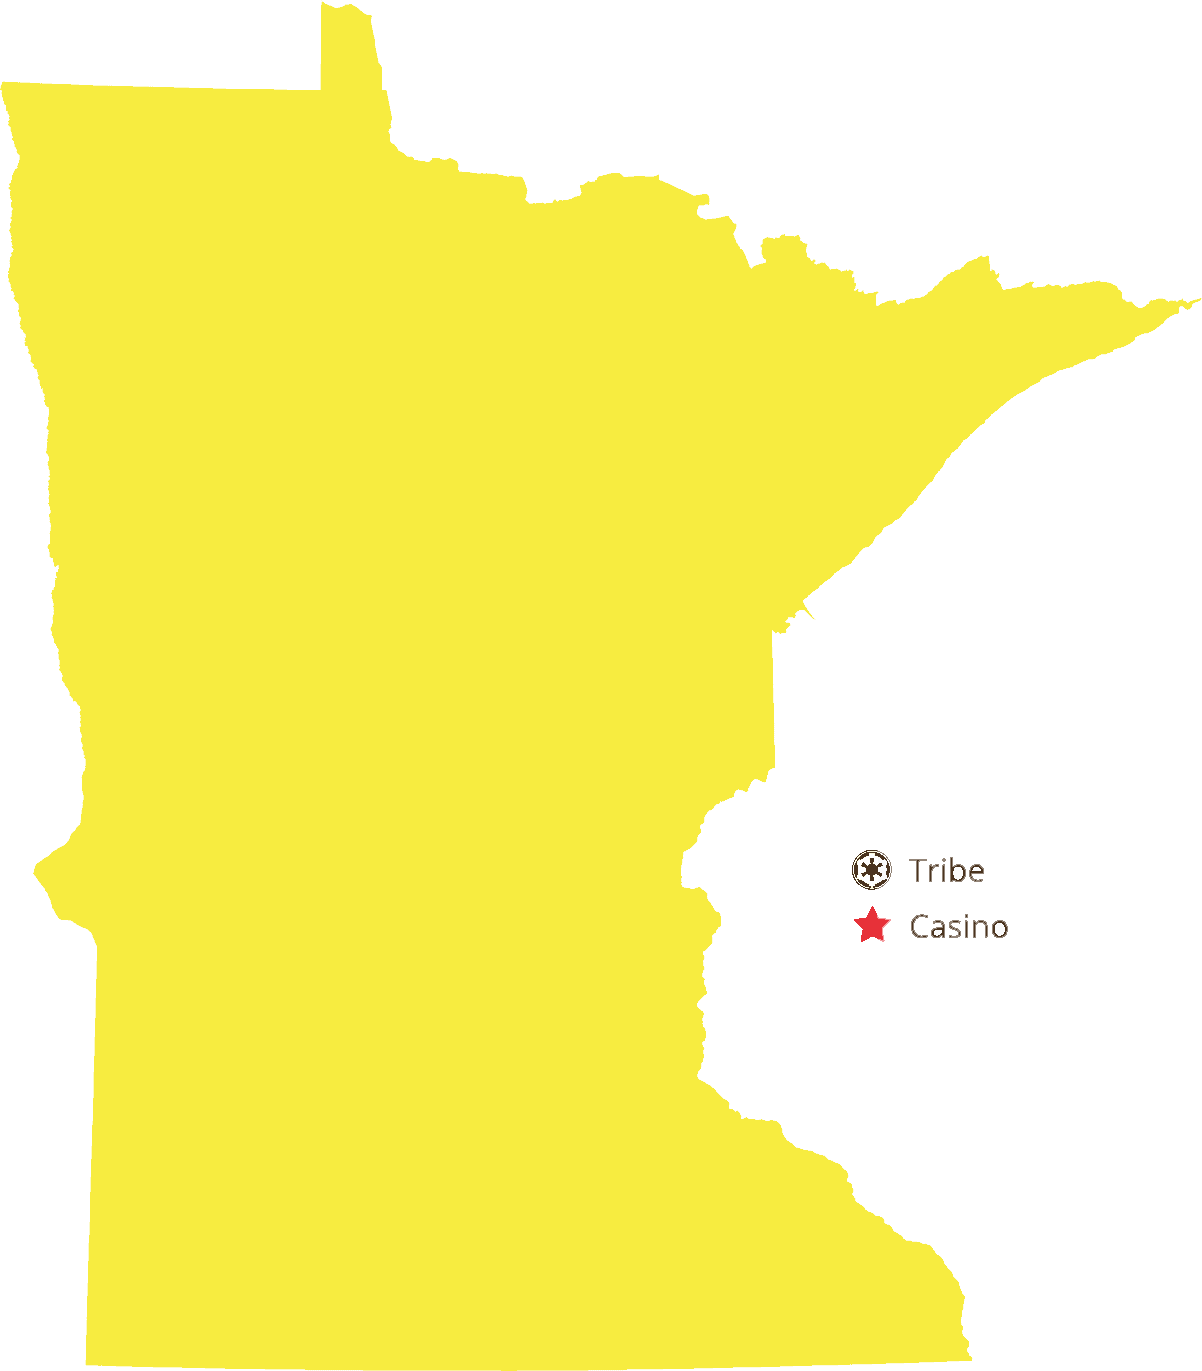 Shape of Minnesota in yellow